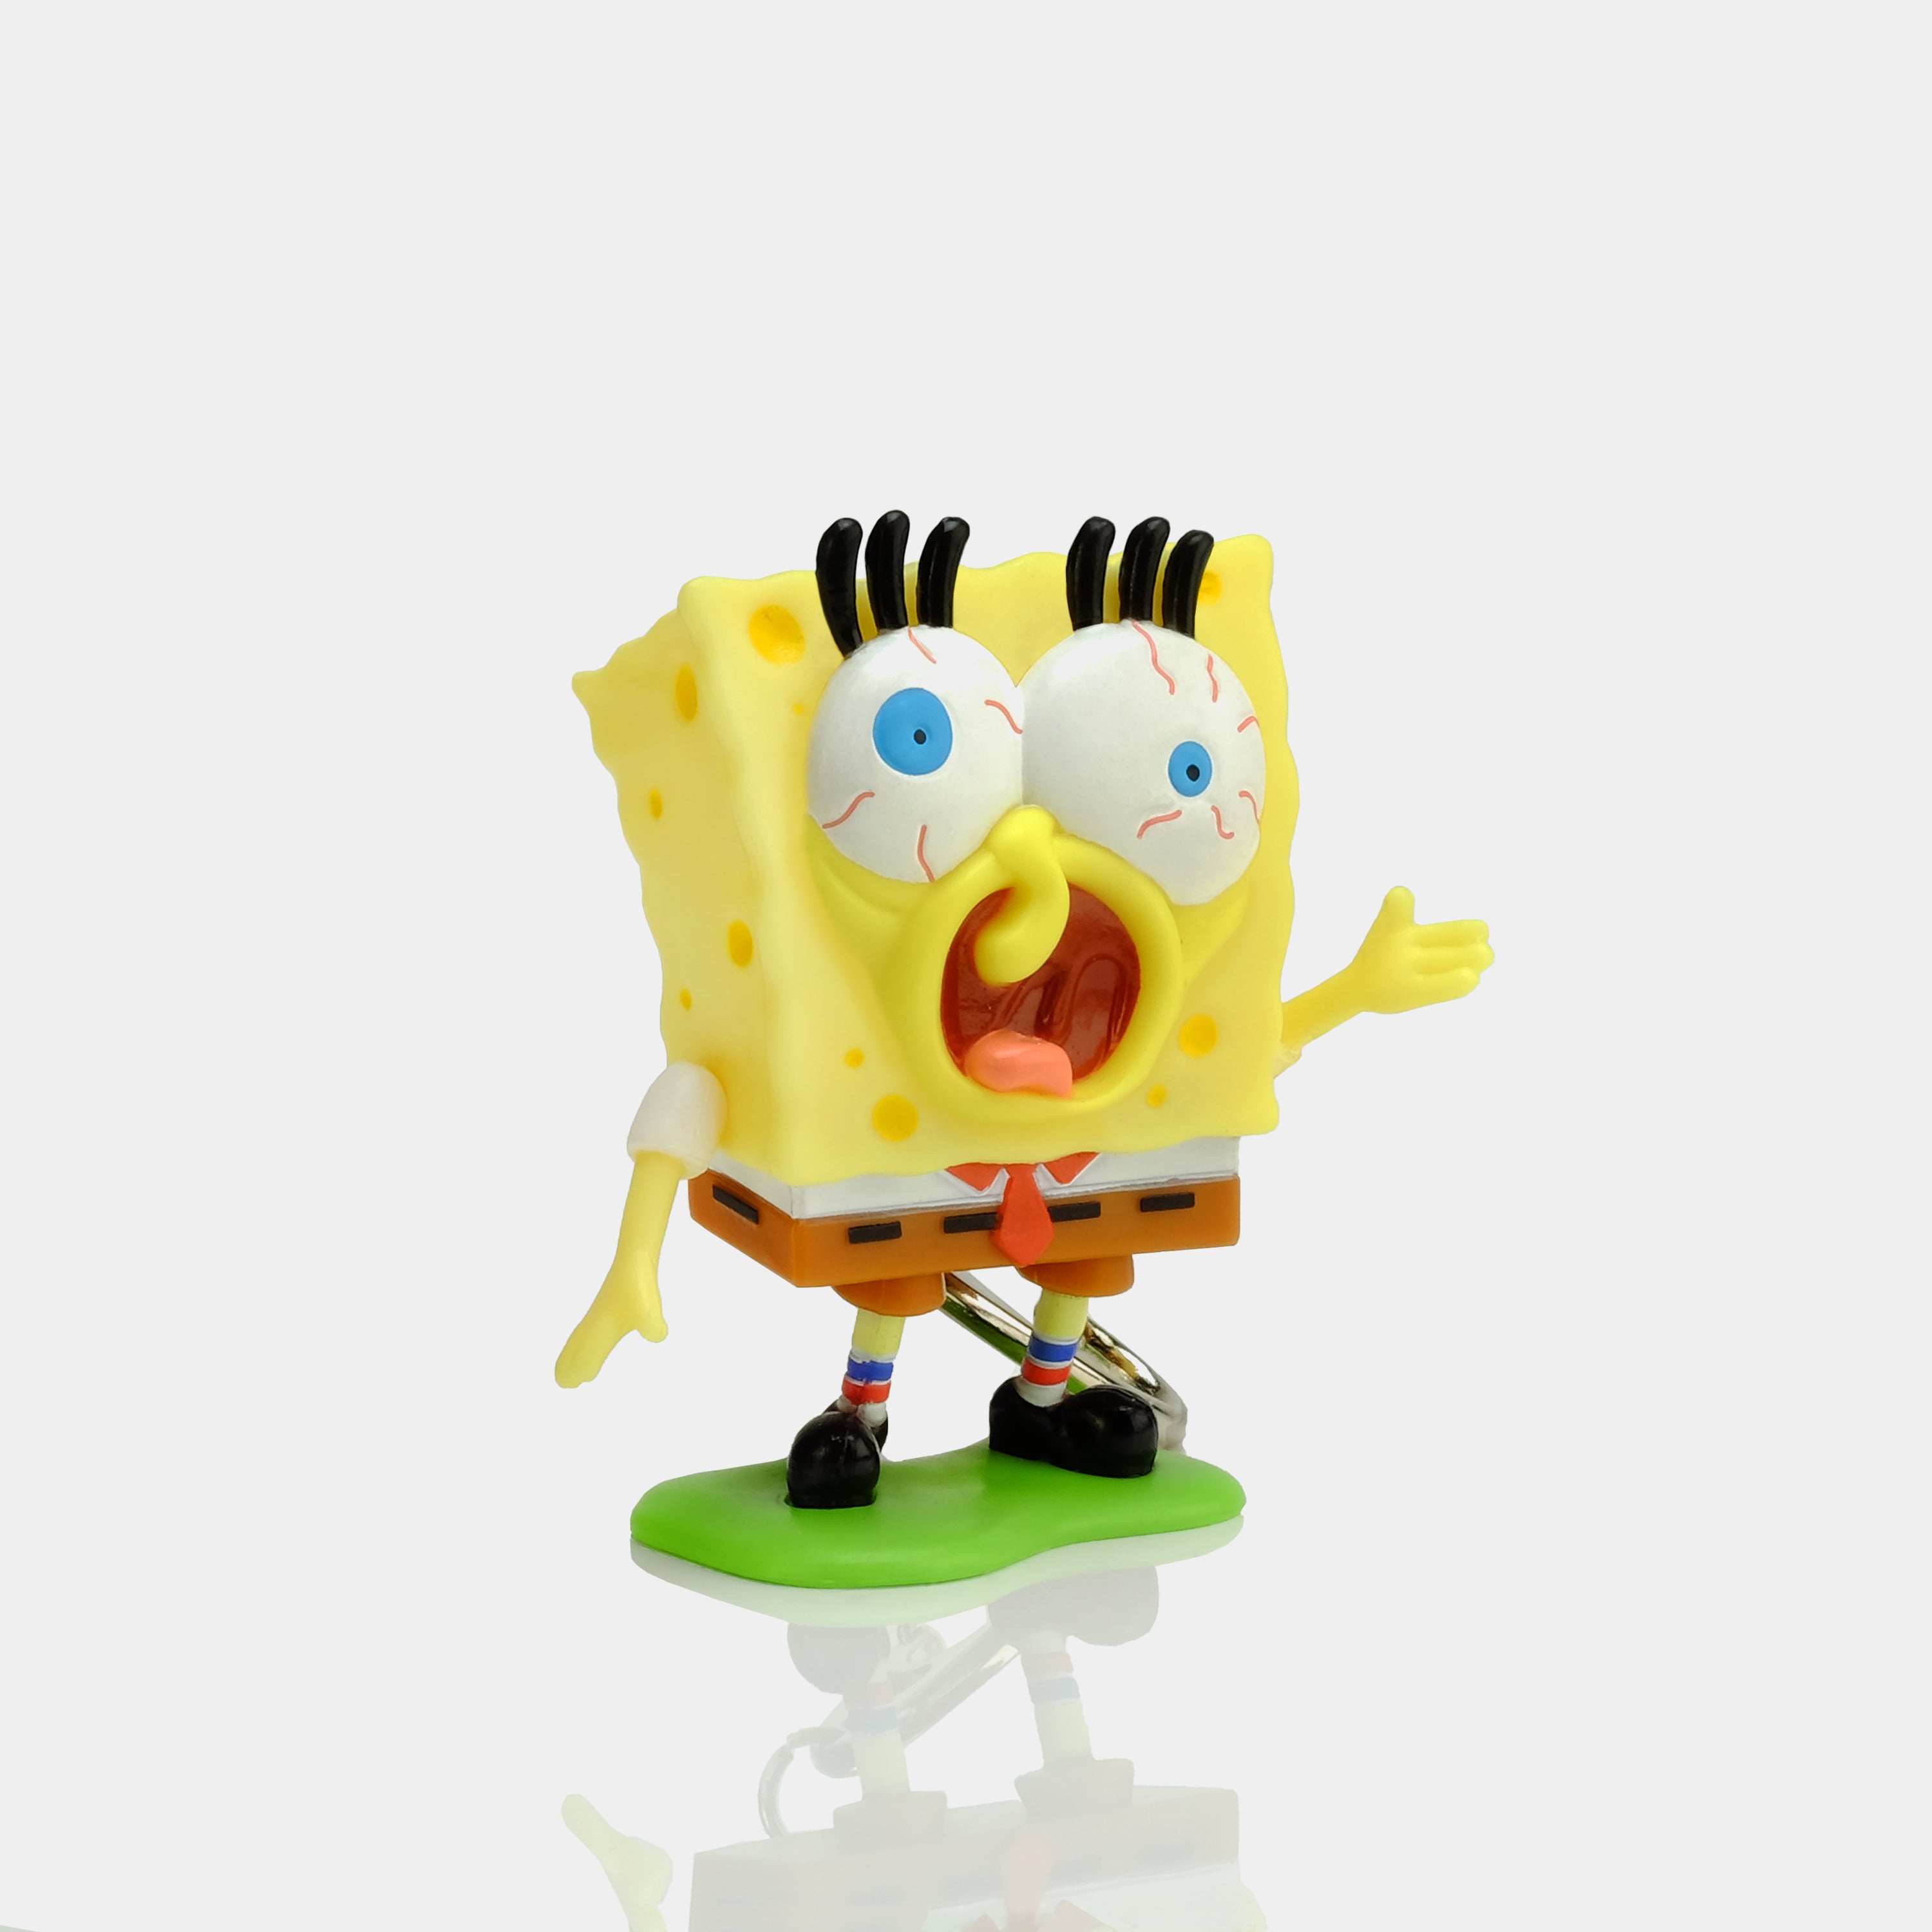 World's Coolest SpongeBob SquarePants Meme Keychain